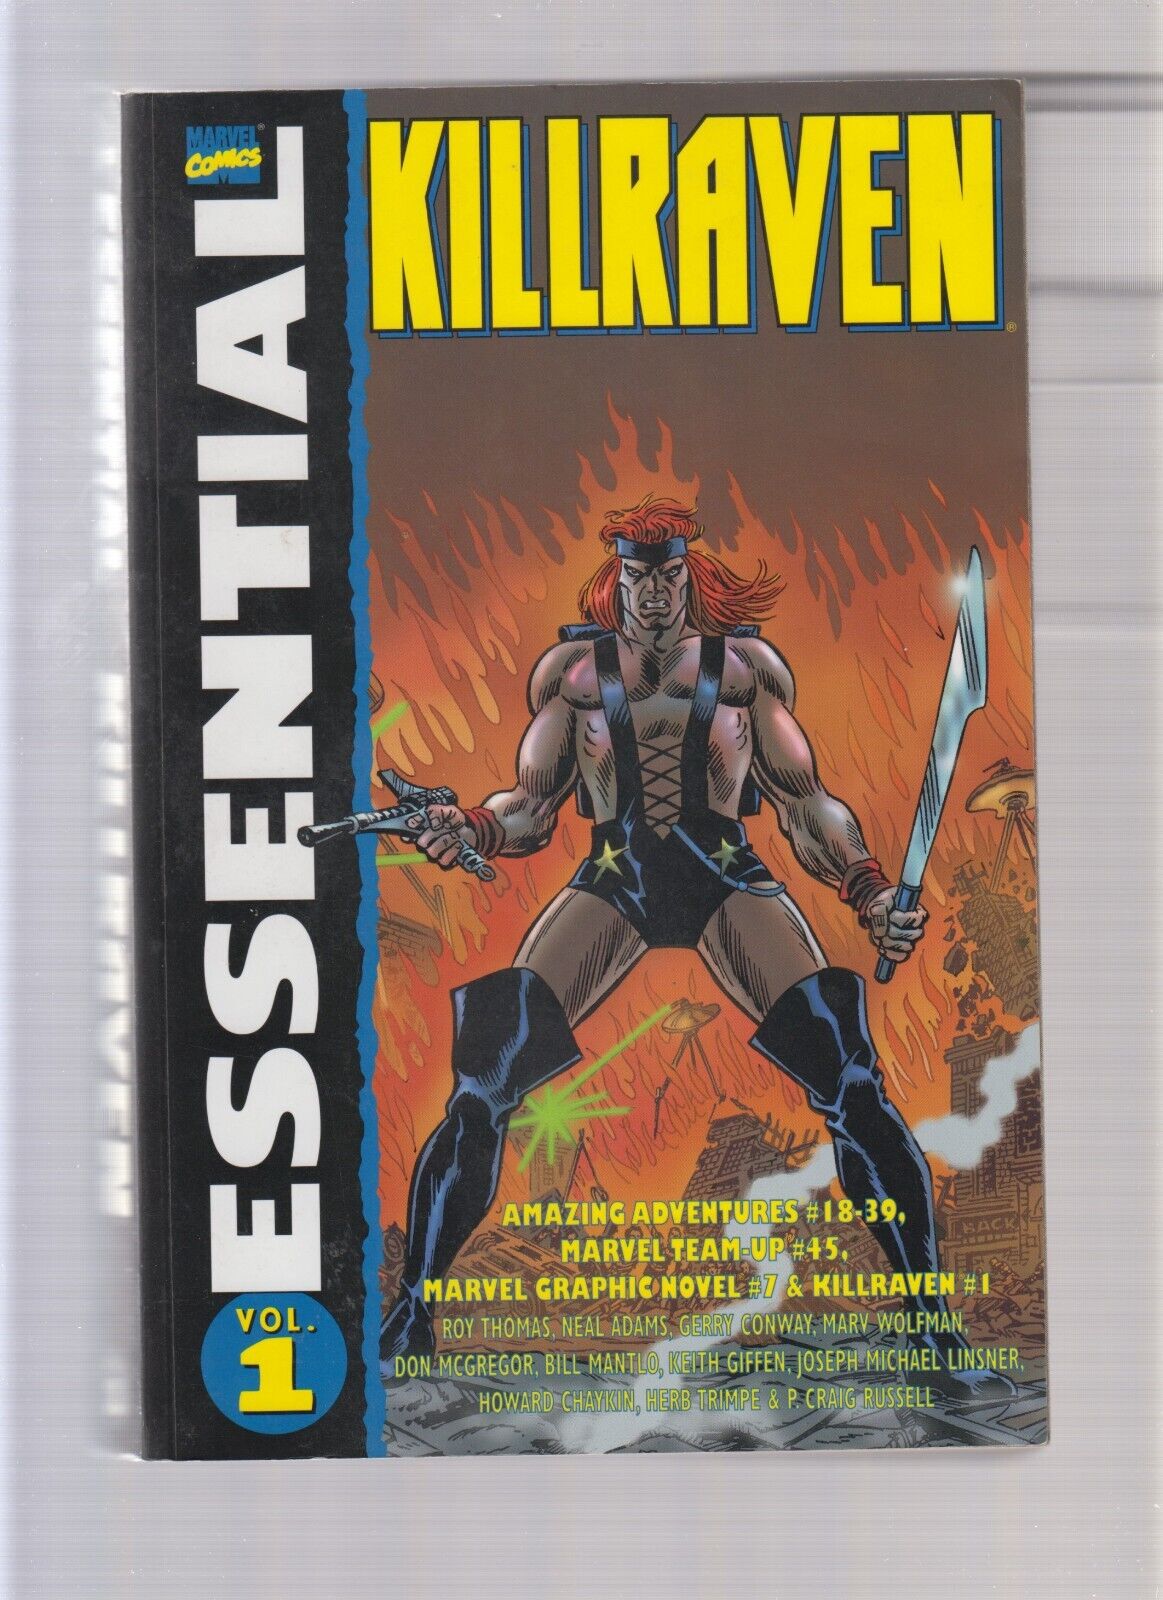 Essential Killraven Vol. 1 - 1st Print - Trade Paperback (6/6.5) 2005